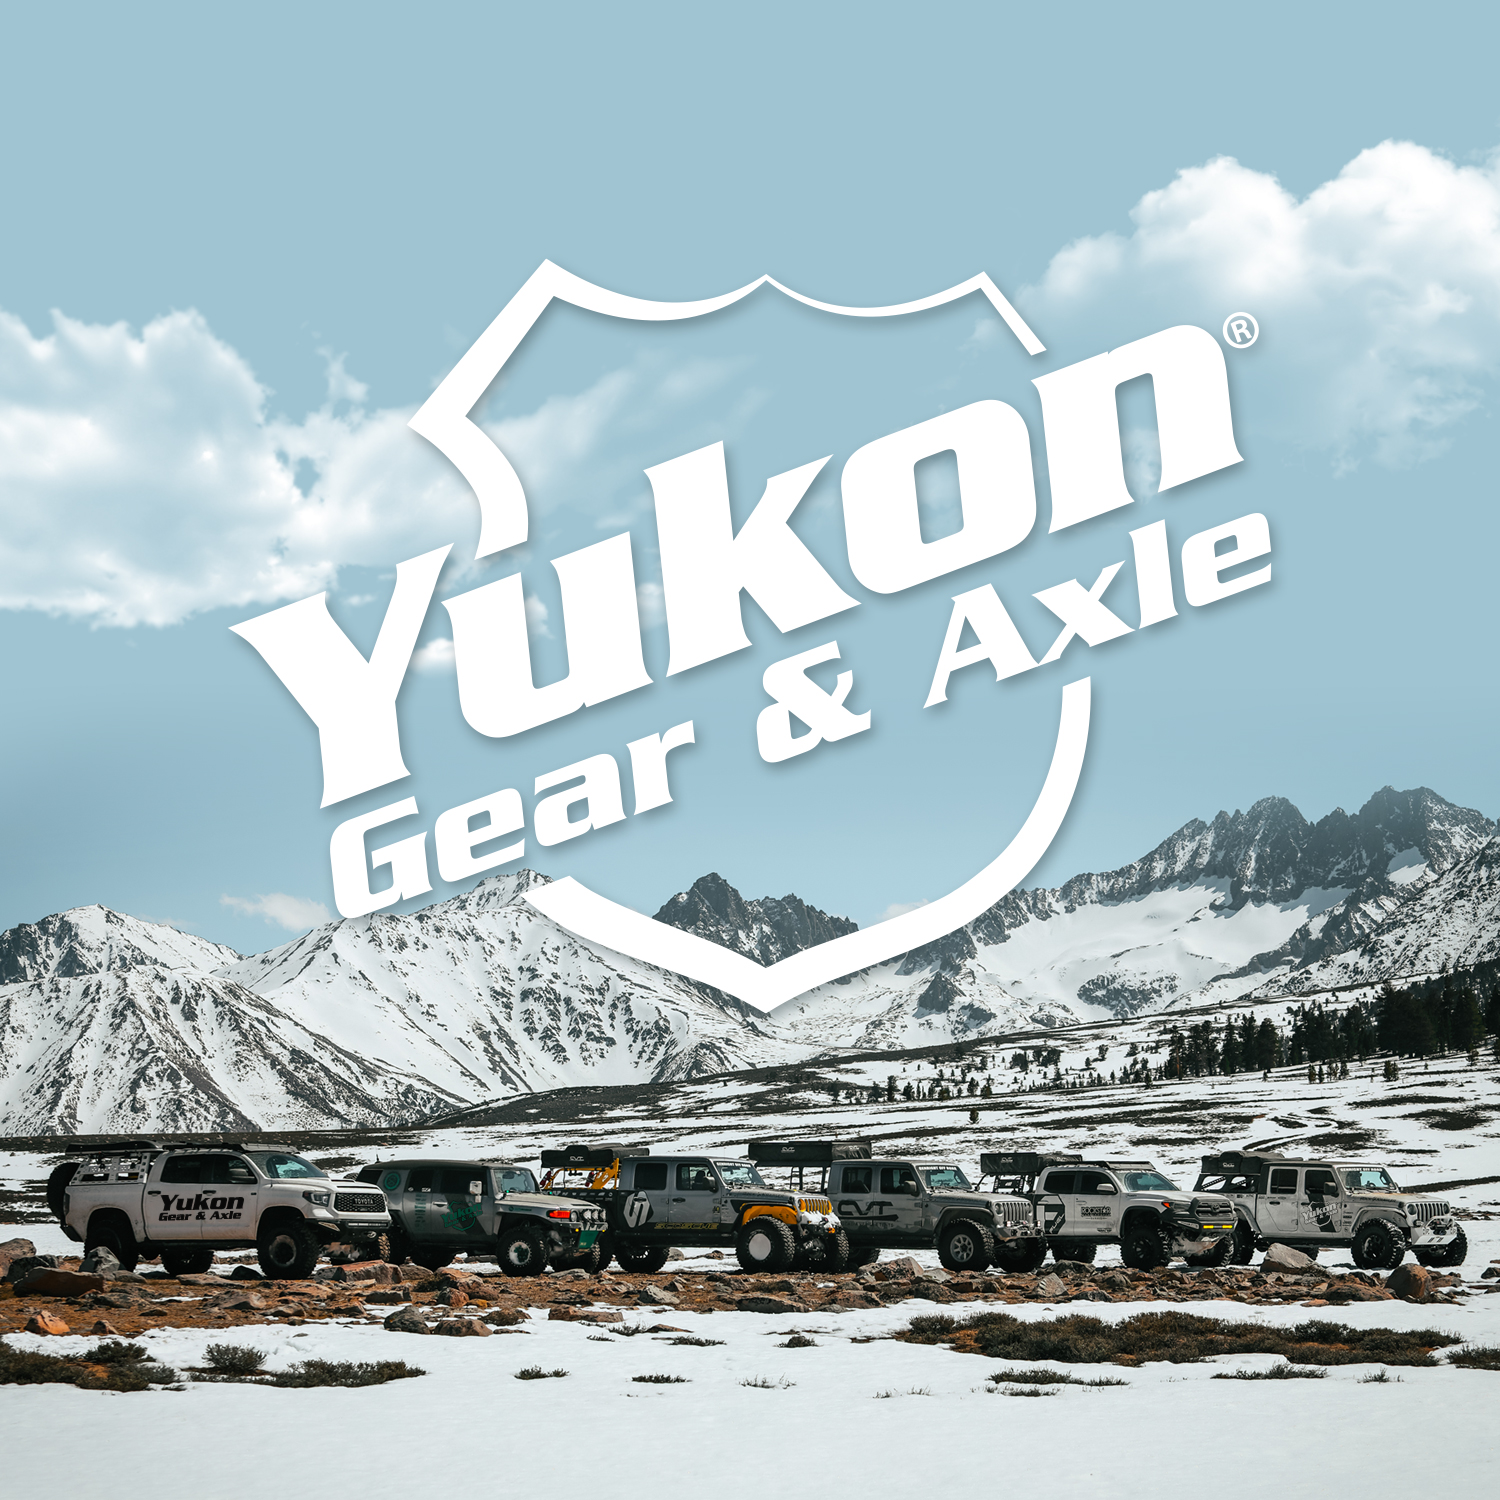 Yukon high performance replacement ring & pinion gear set, Dana 60, 5.38 ratio 